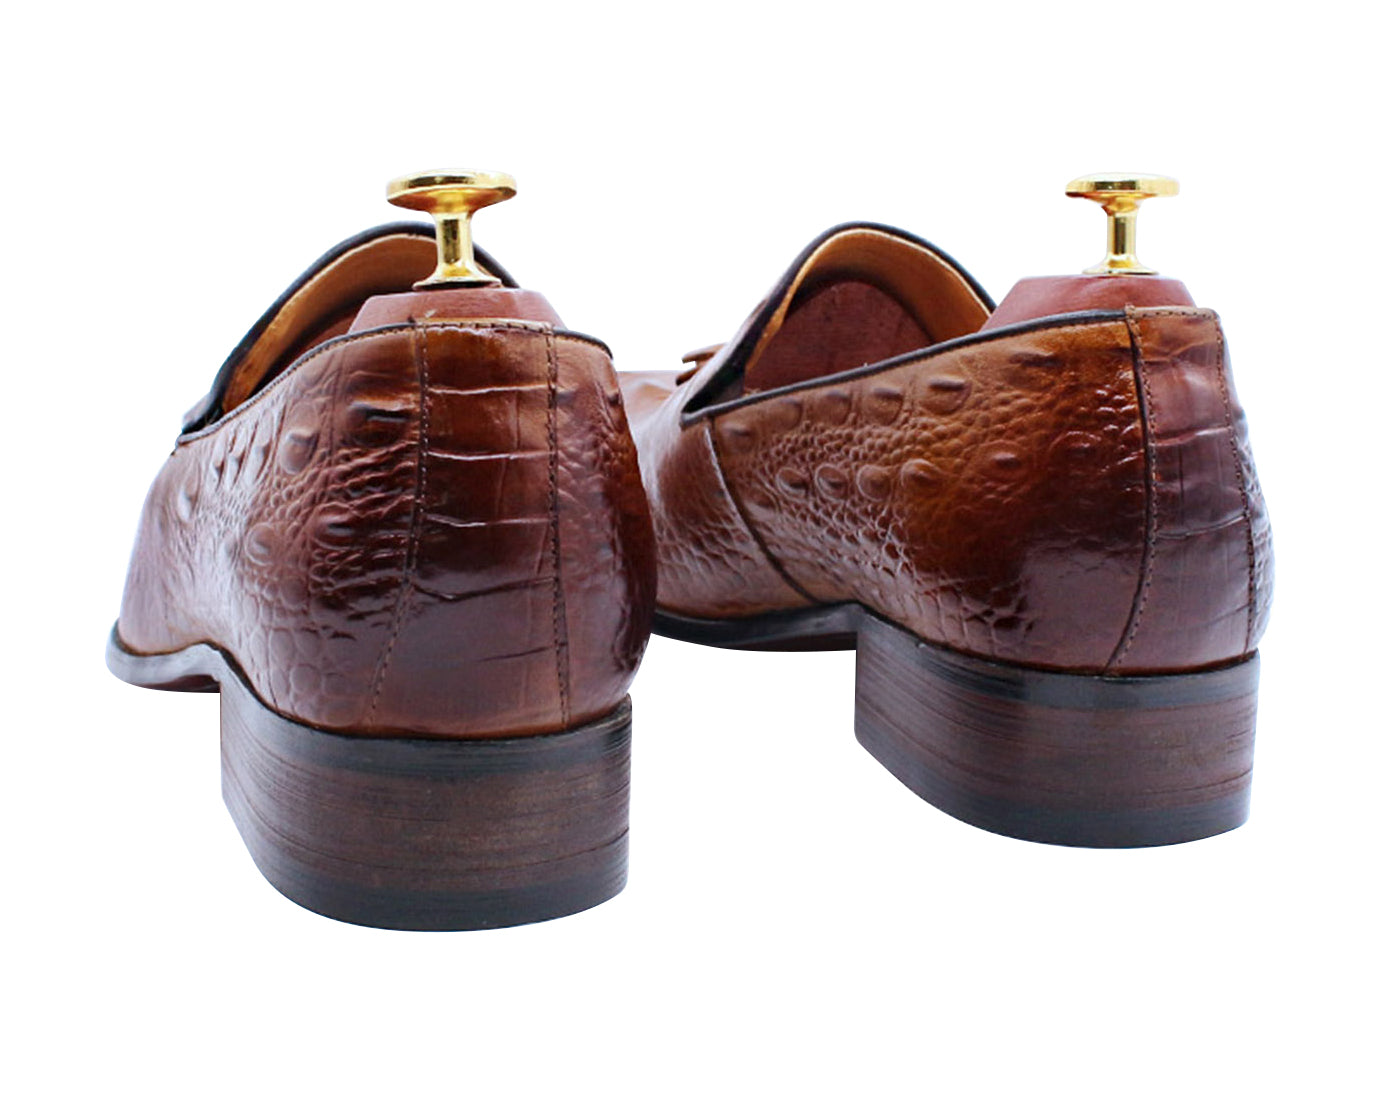 Men's Dress Formal Tassel Loafers Tuxedo Shoes